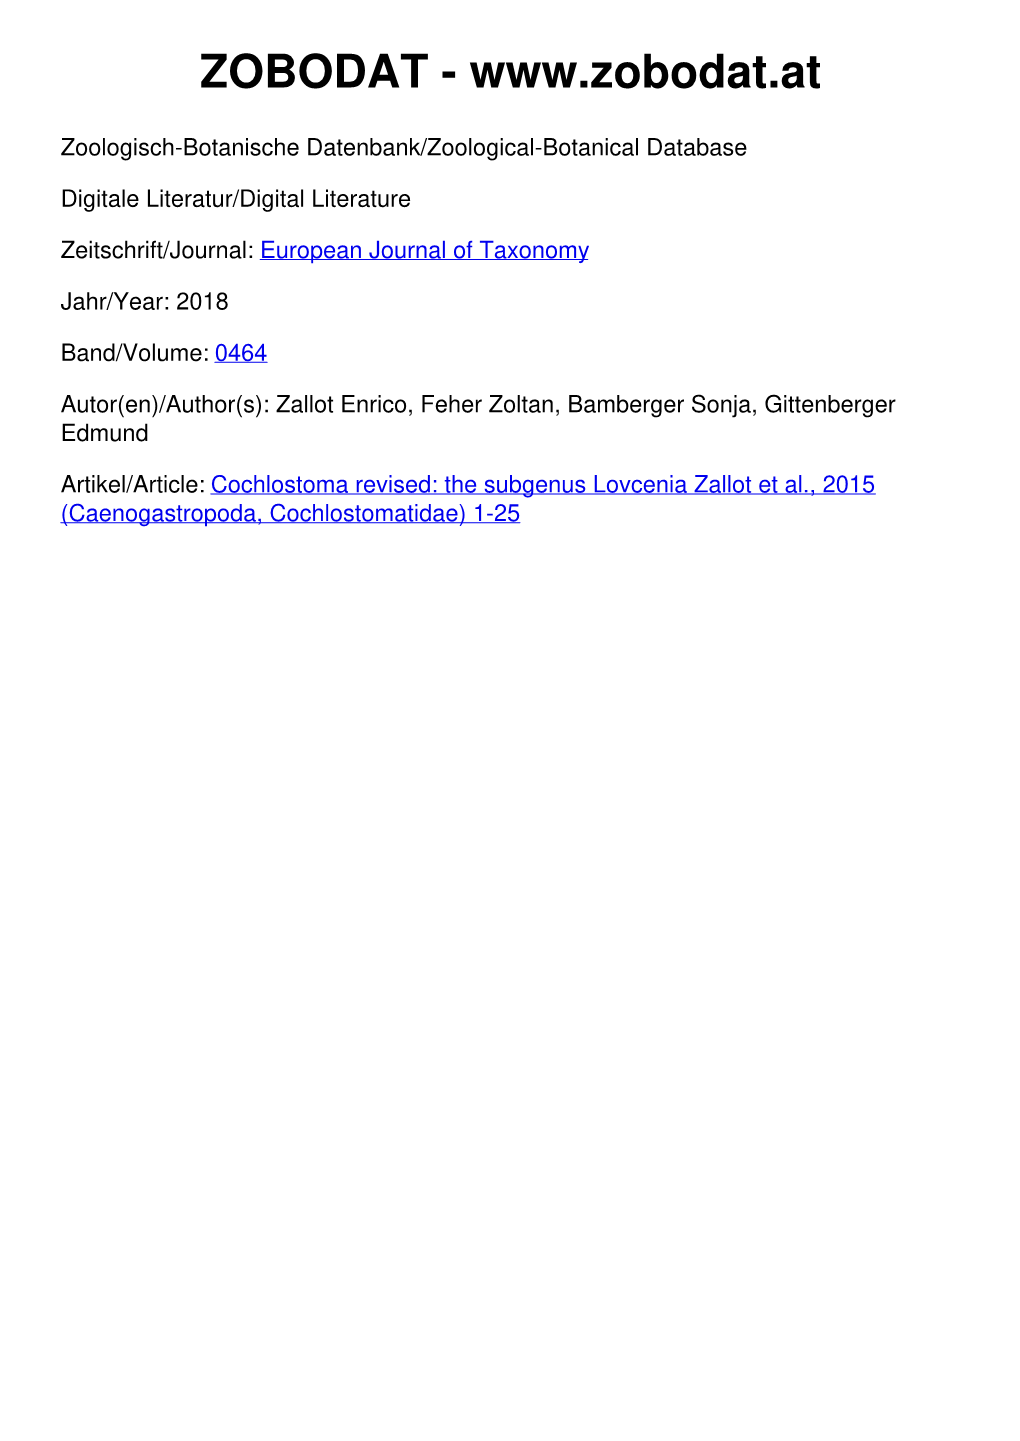 Cochlostoma Revised: the Subgenus Lovcenia Zallot Et Al., 2015